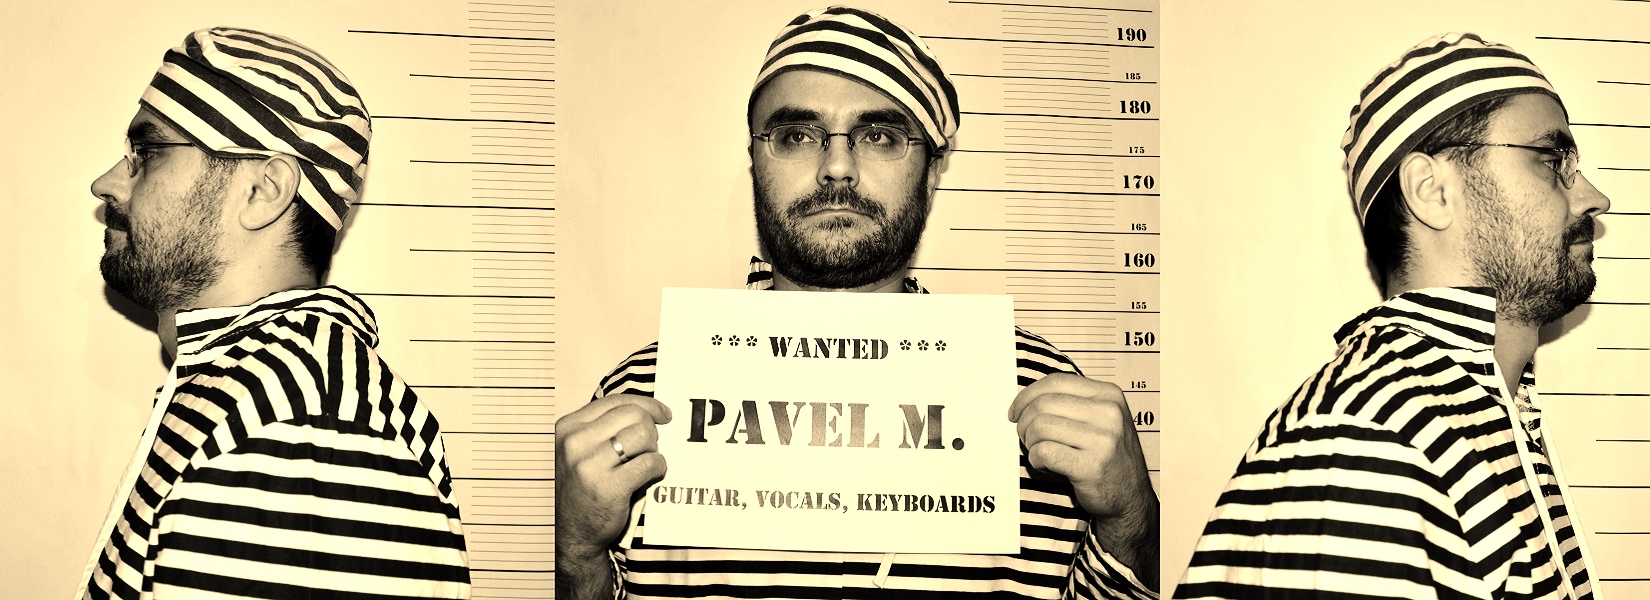 Pavel M